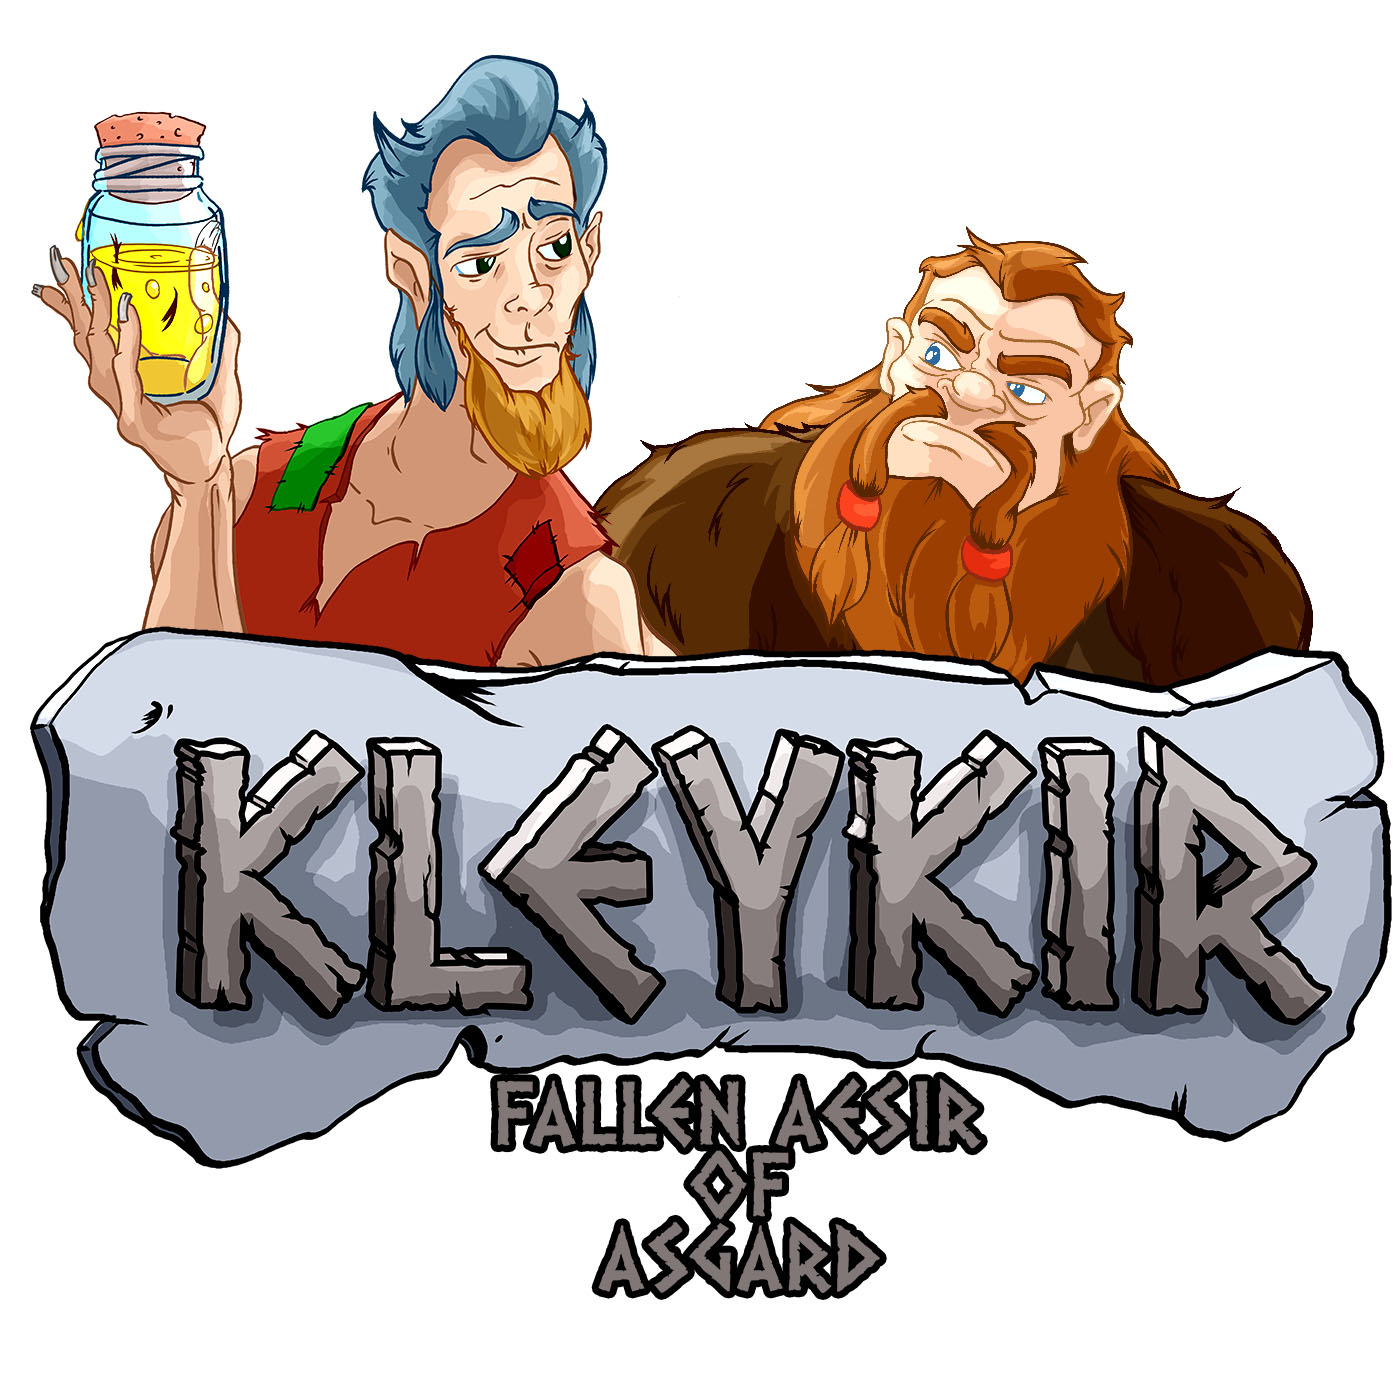 Kleykir, Fallen Aesir of Asgard: Episode 4, Tyr Today, Gong Tomorrow